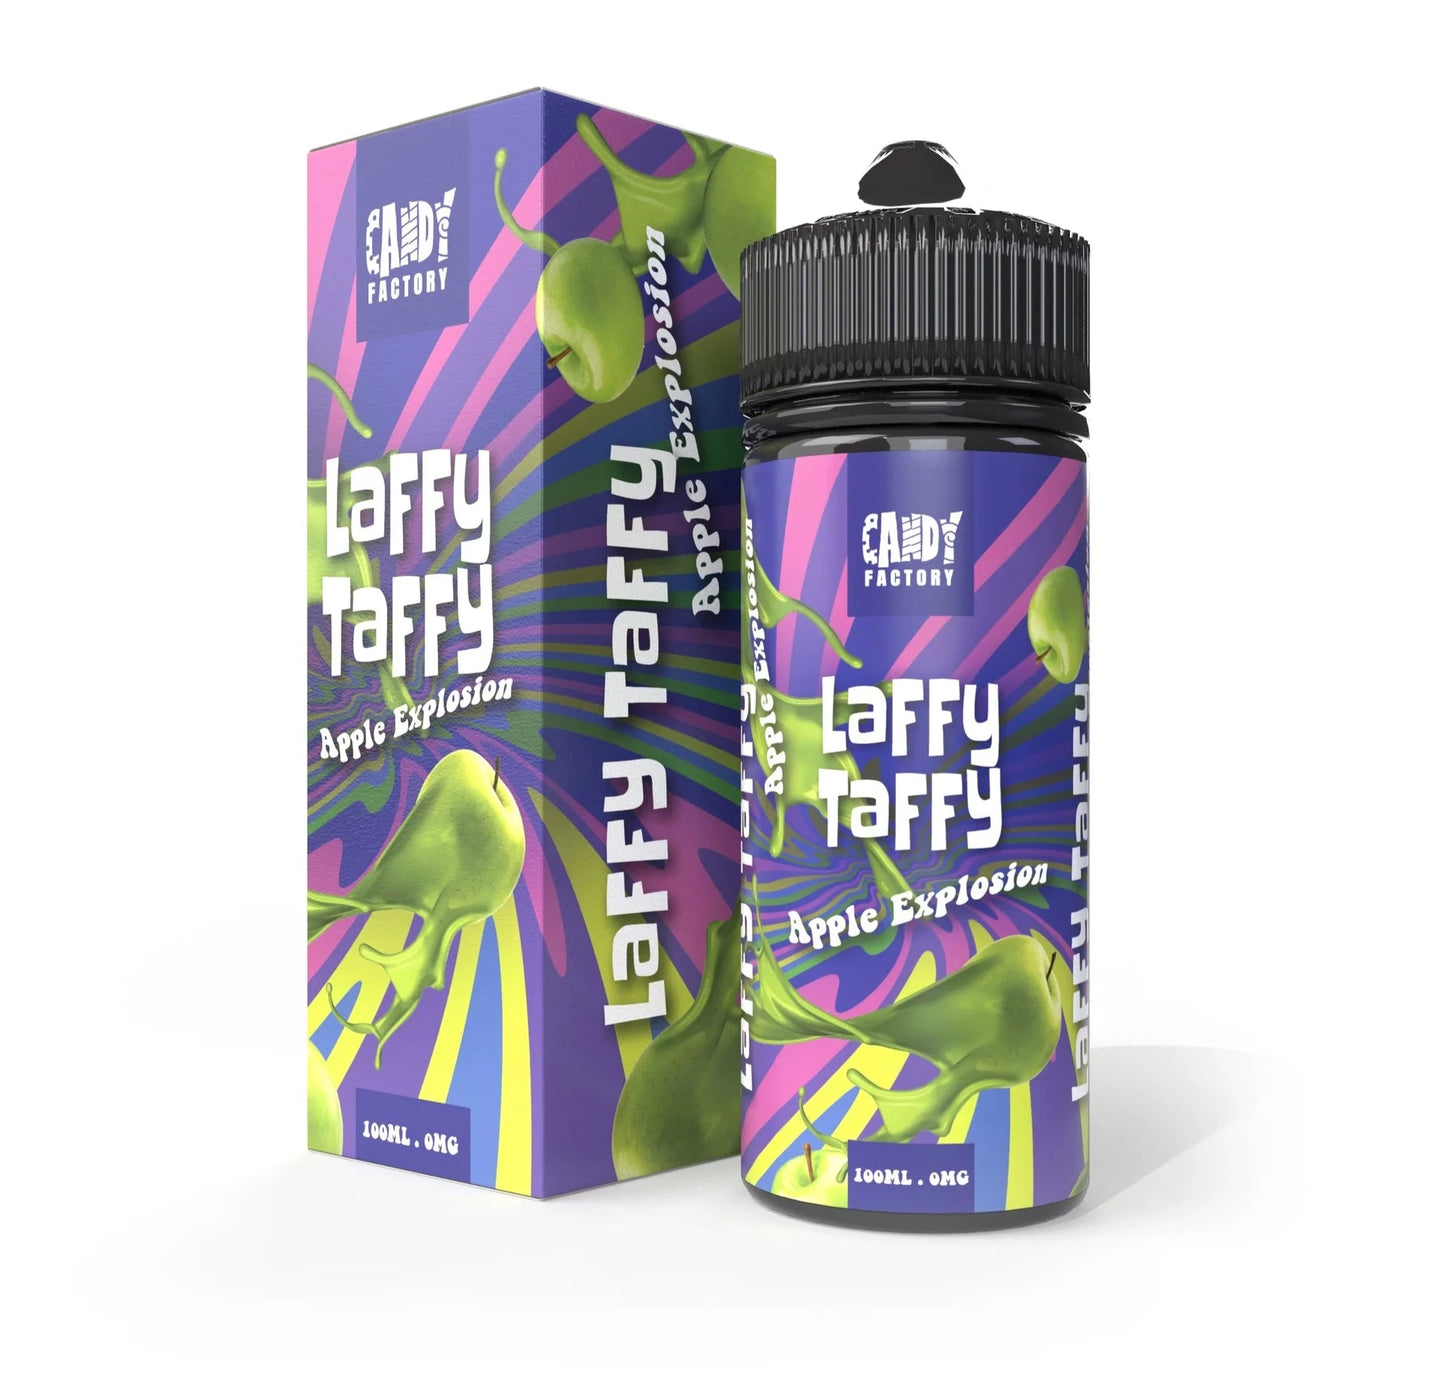 Candy Factory - Laffy Taffy 100ml